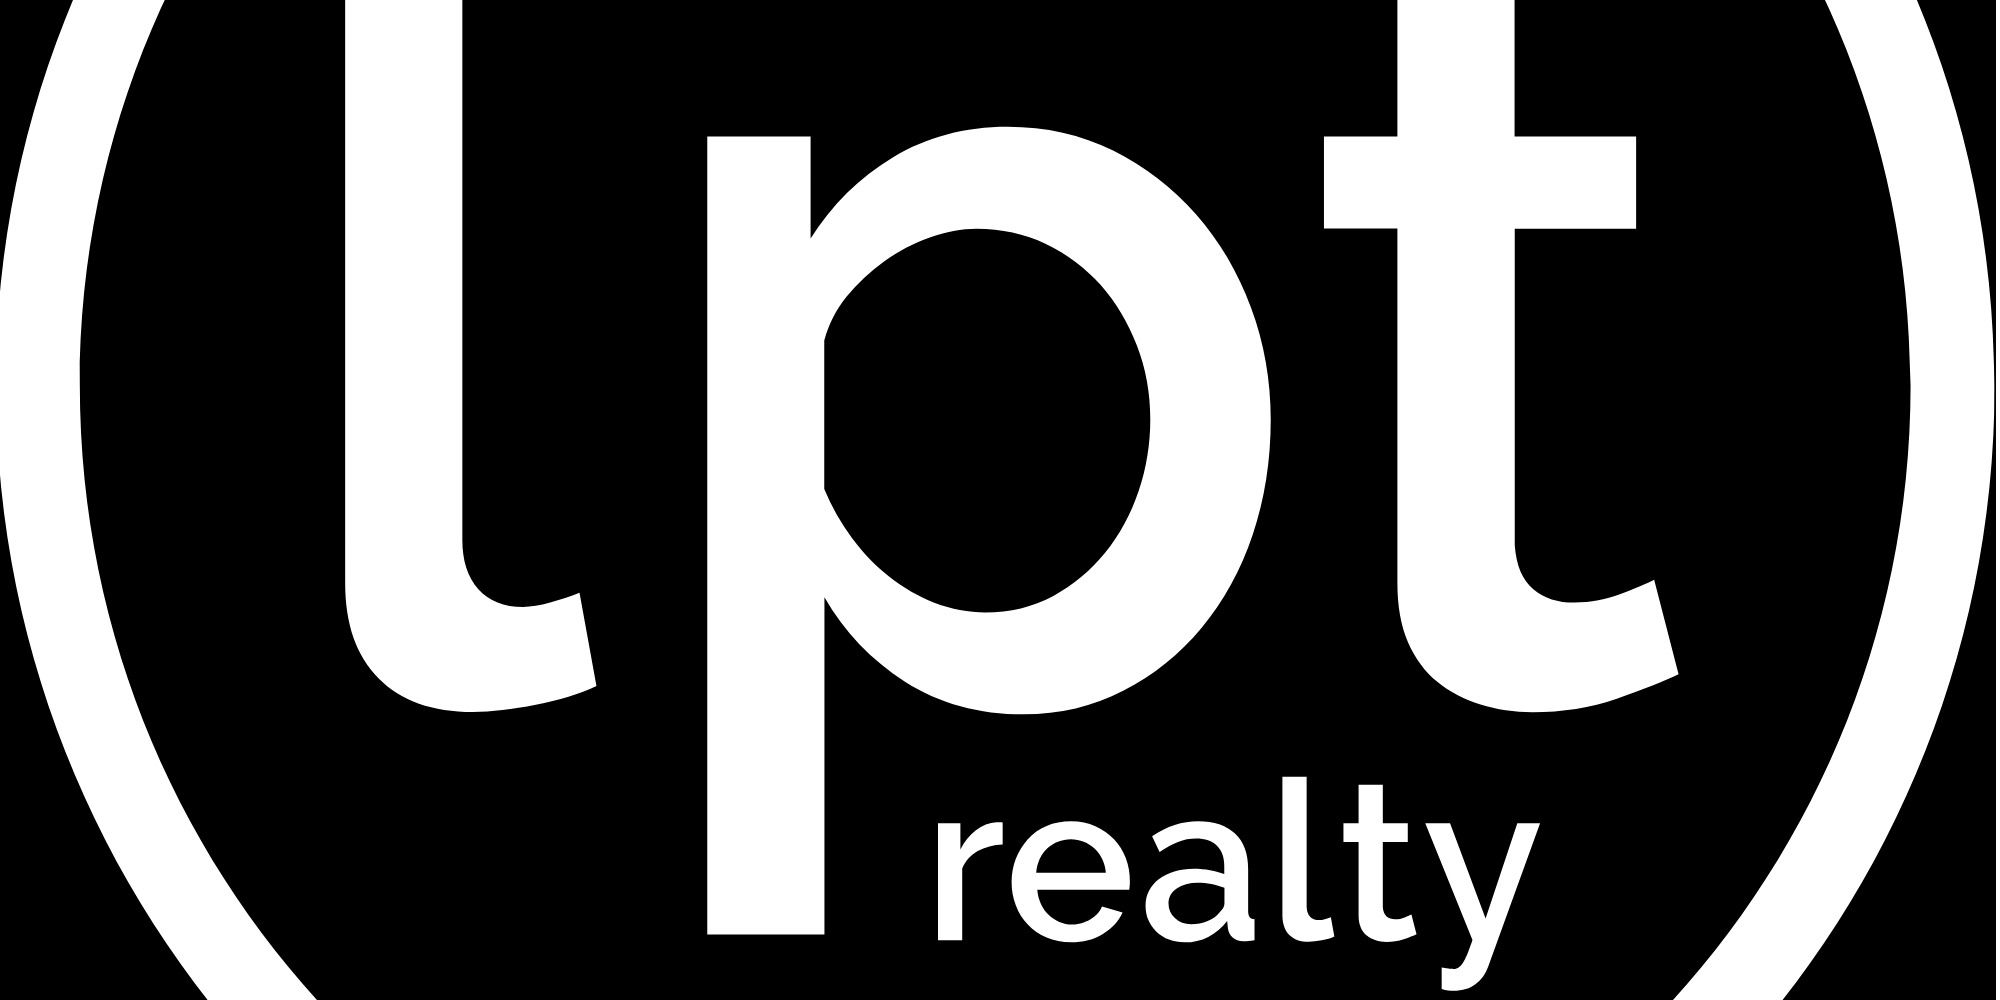  LPT Realty,LLC